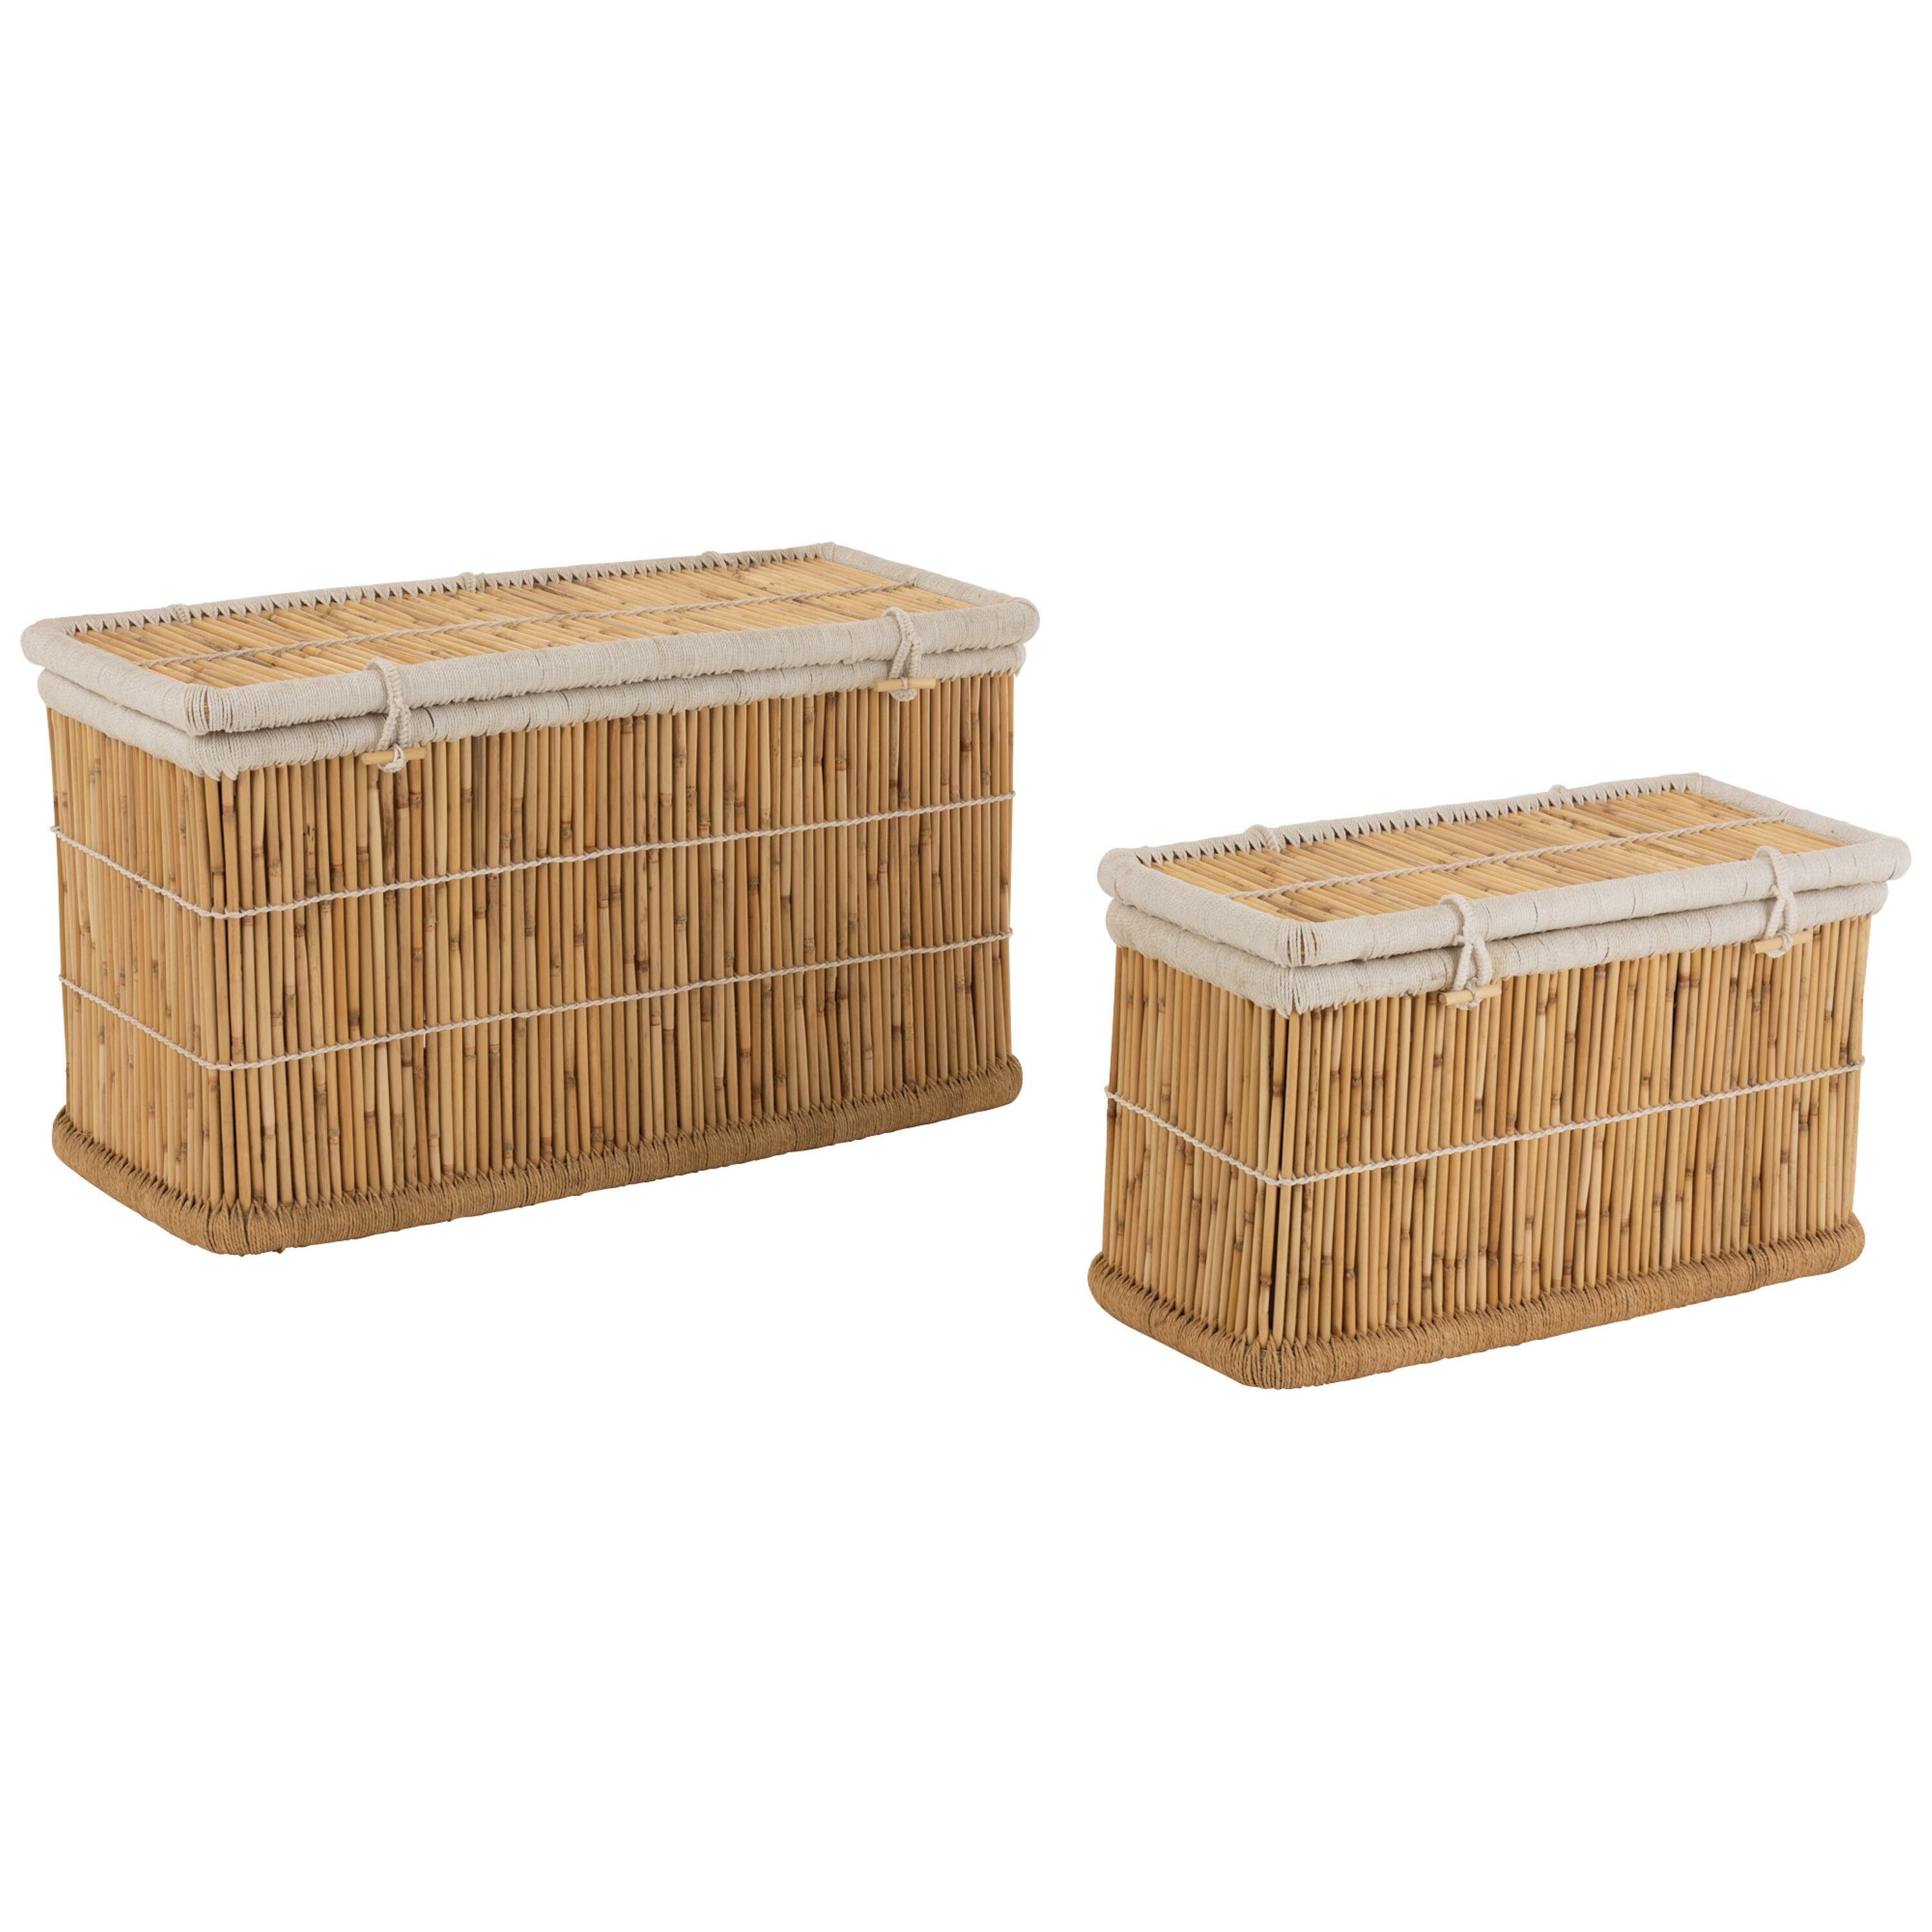 Baskets Rectangular Bamboo Natural/white